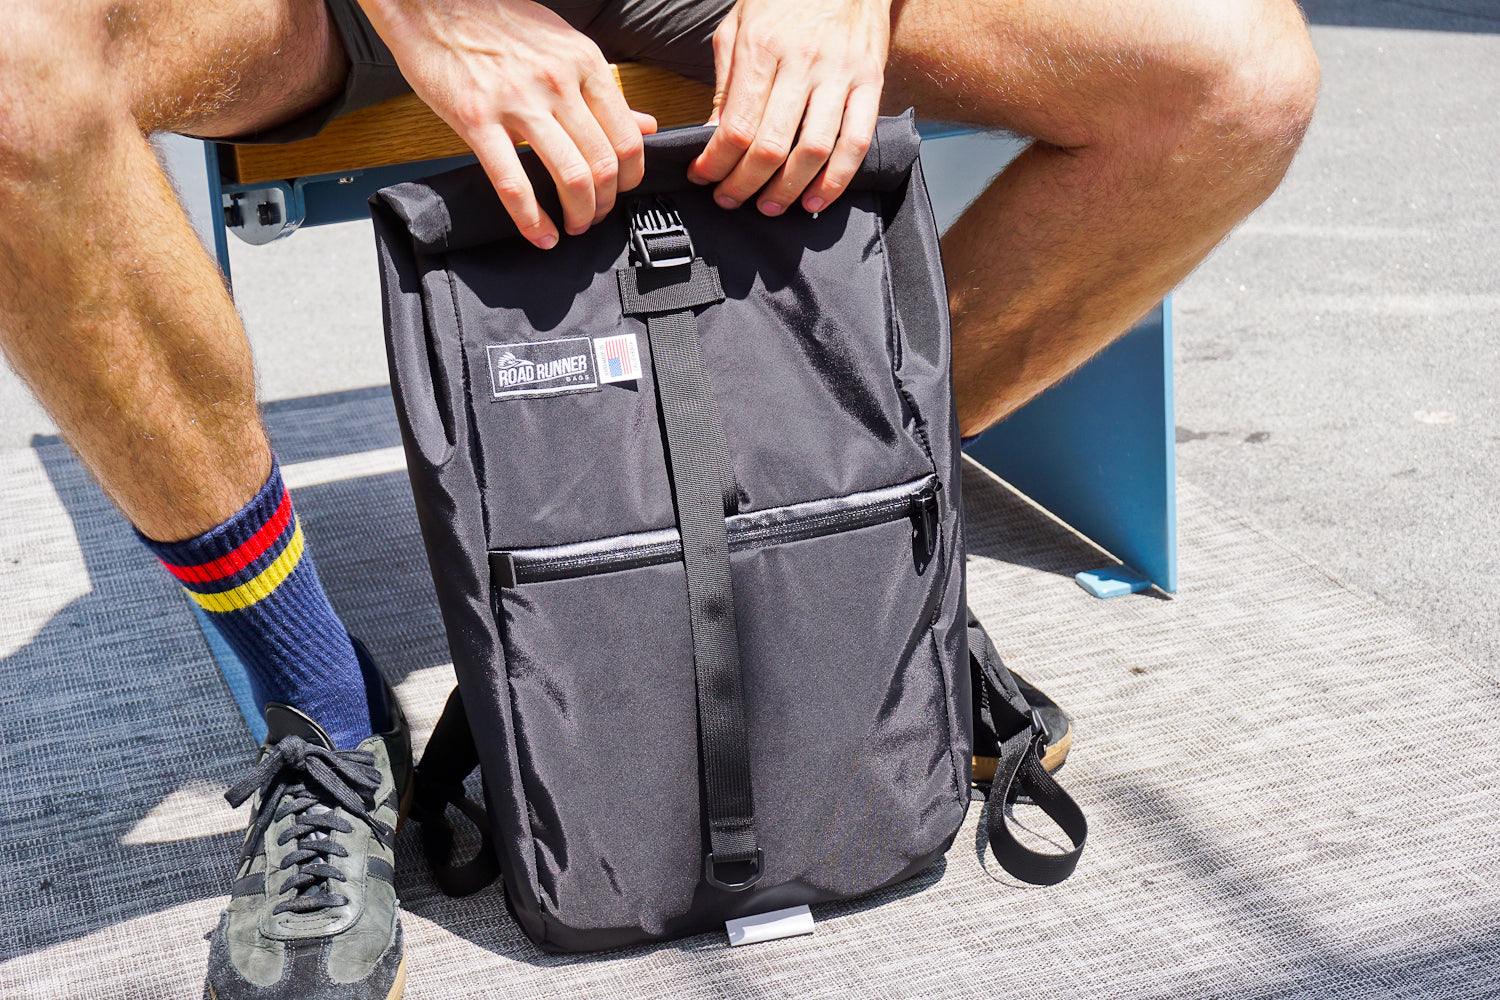 Evil Mini Packable backpack by road runner bags